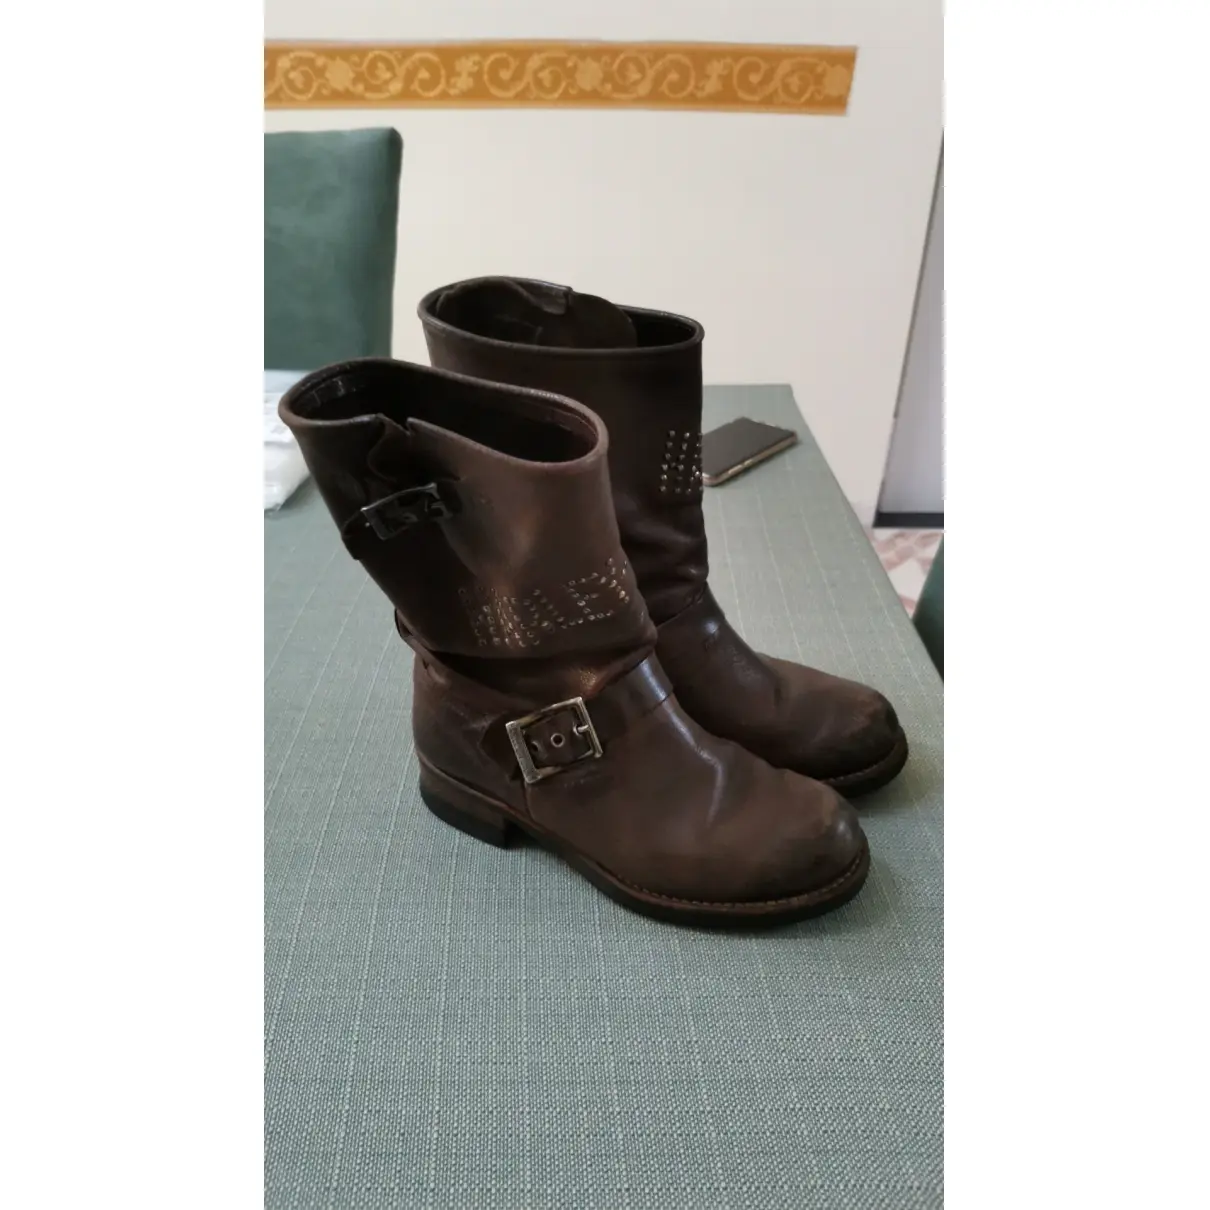 Buy HARLEY DAVIDSON Leather cowboy boots online